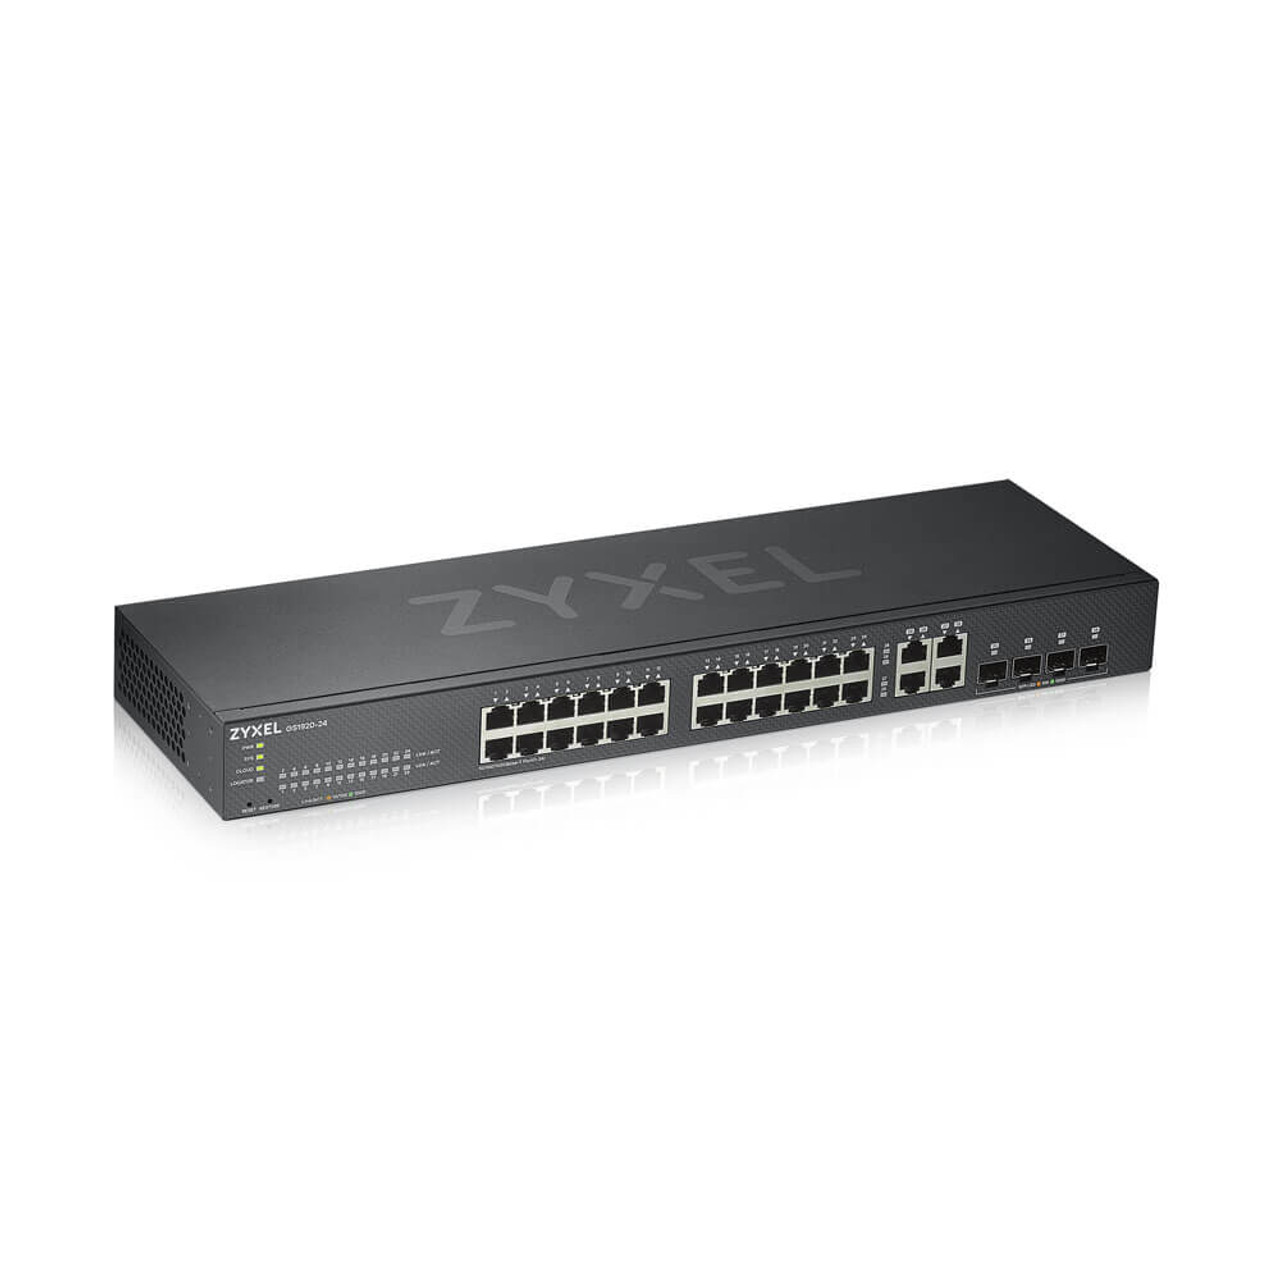 GS1920-24v2 | Zyxel | GS1920-24V2 network switch Managed Gigabit Ethernet (10/100/1000) Black